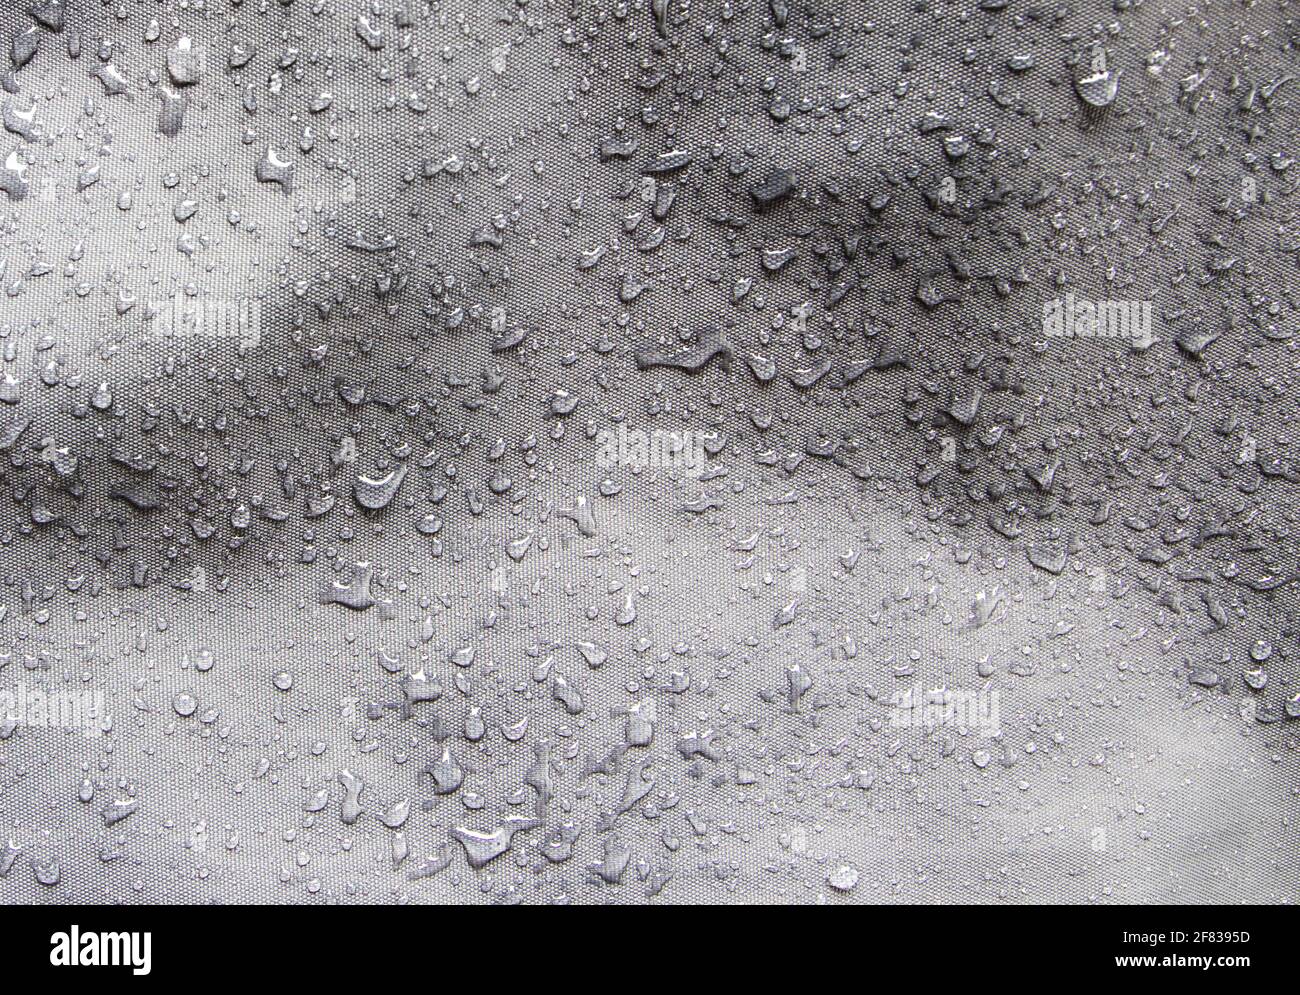 Tejido de nylon gris impermeable cubierto con gotas de agua después de la lluvia Foto de stock